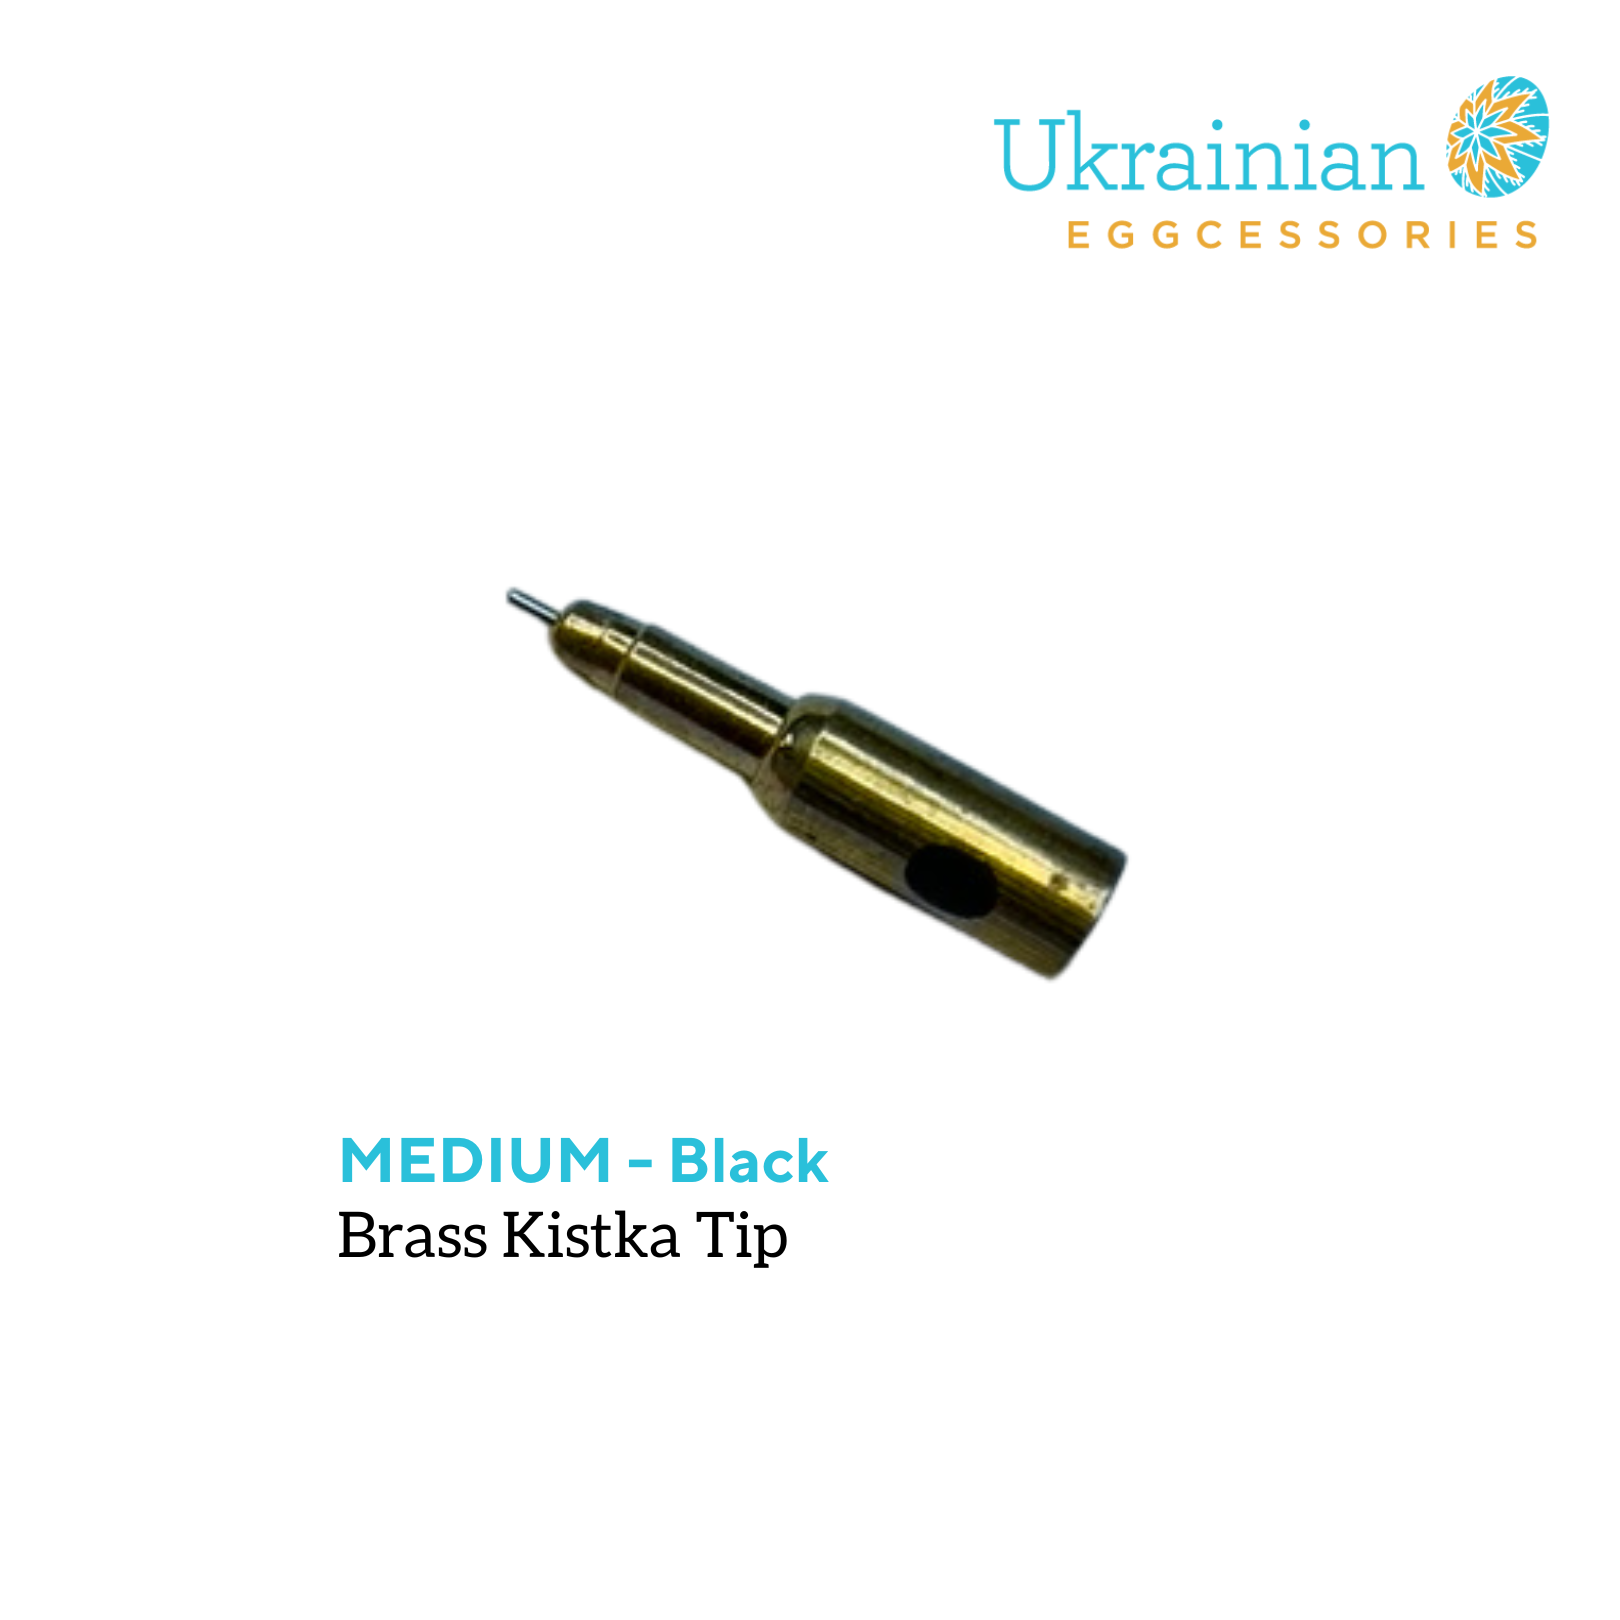 Brass Kistka Tip - #4 Medium Tip